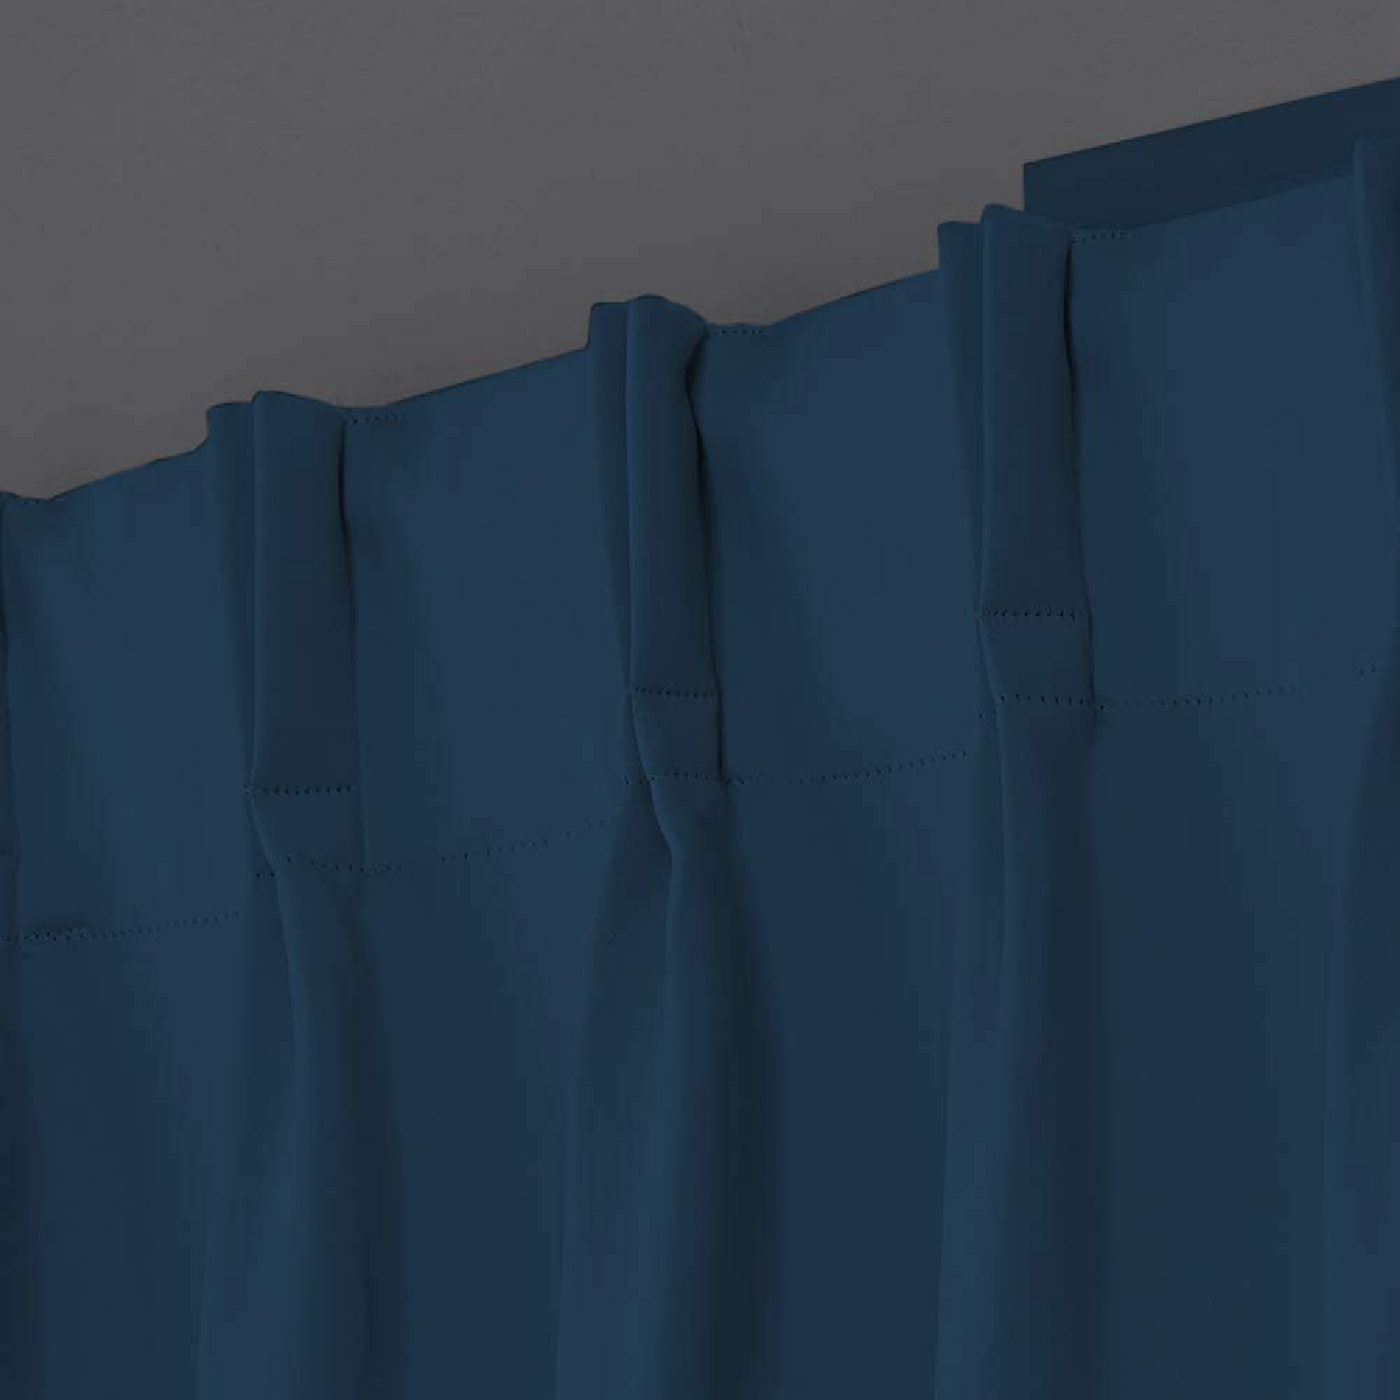 Double Pinch Pleat Curtain 1 Piece - Navy Blue